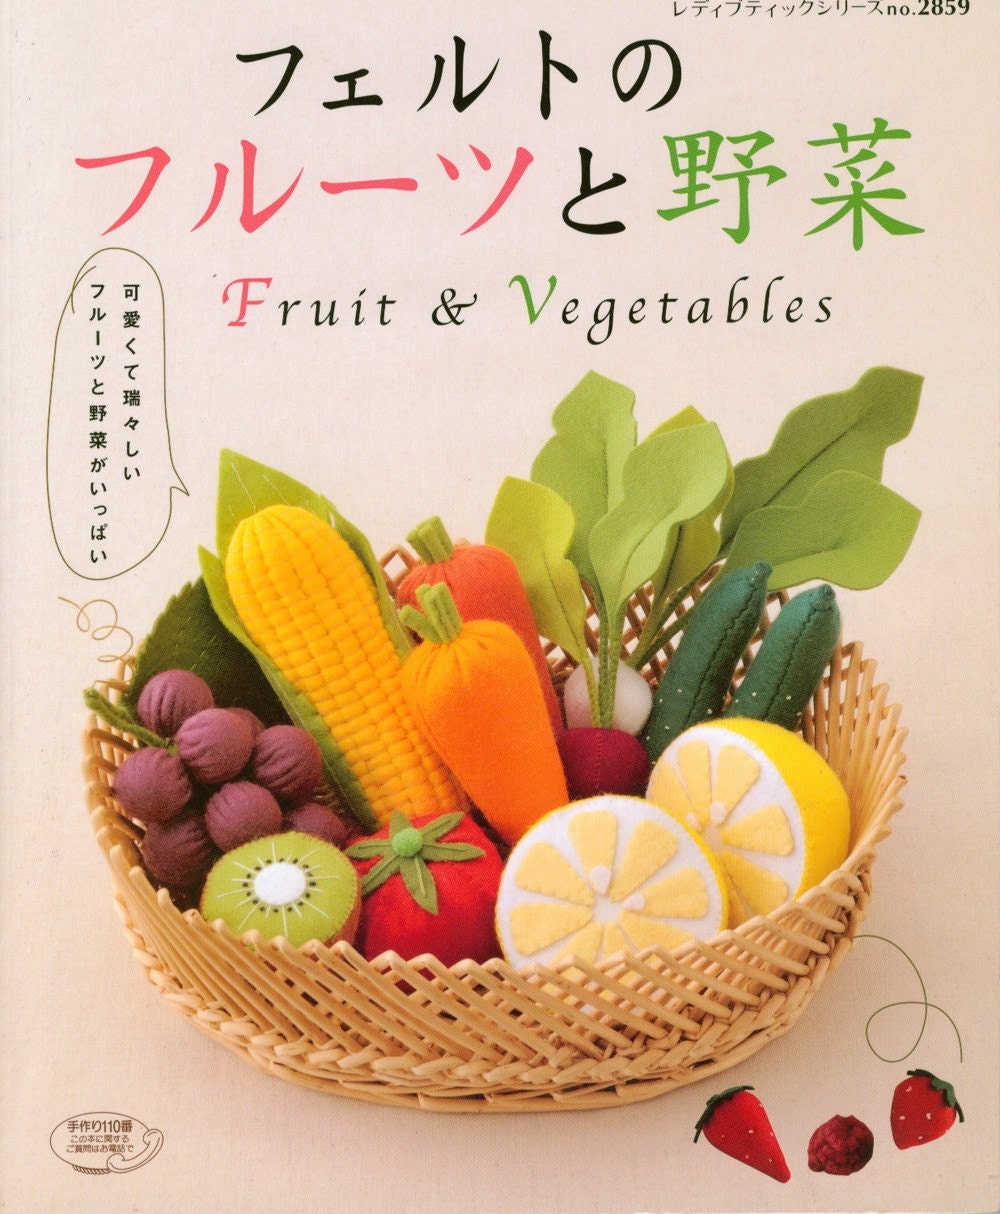 Felt Fruits and Vegetables - Japanese Felt Pattern Craft Book